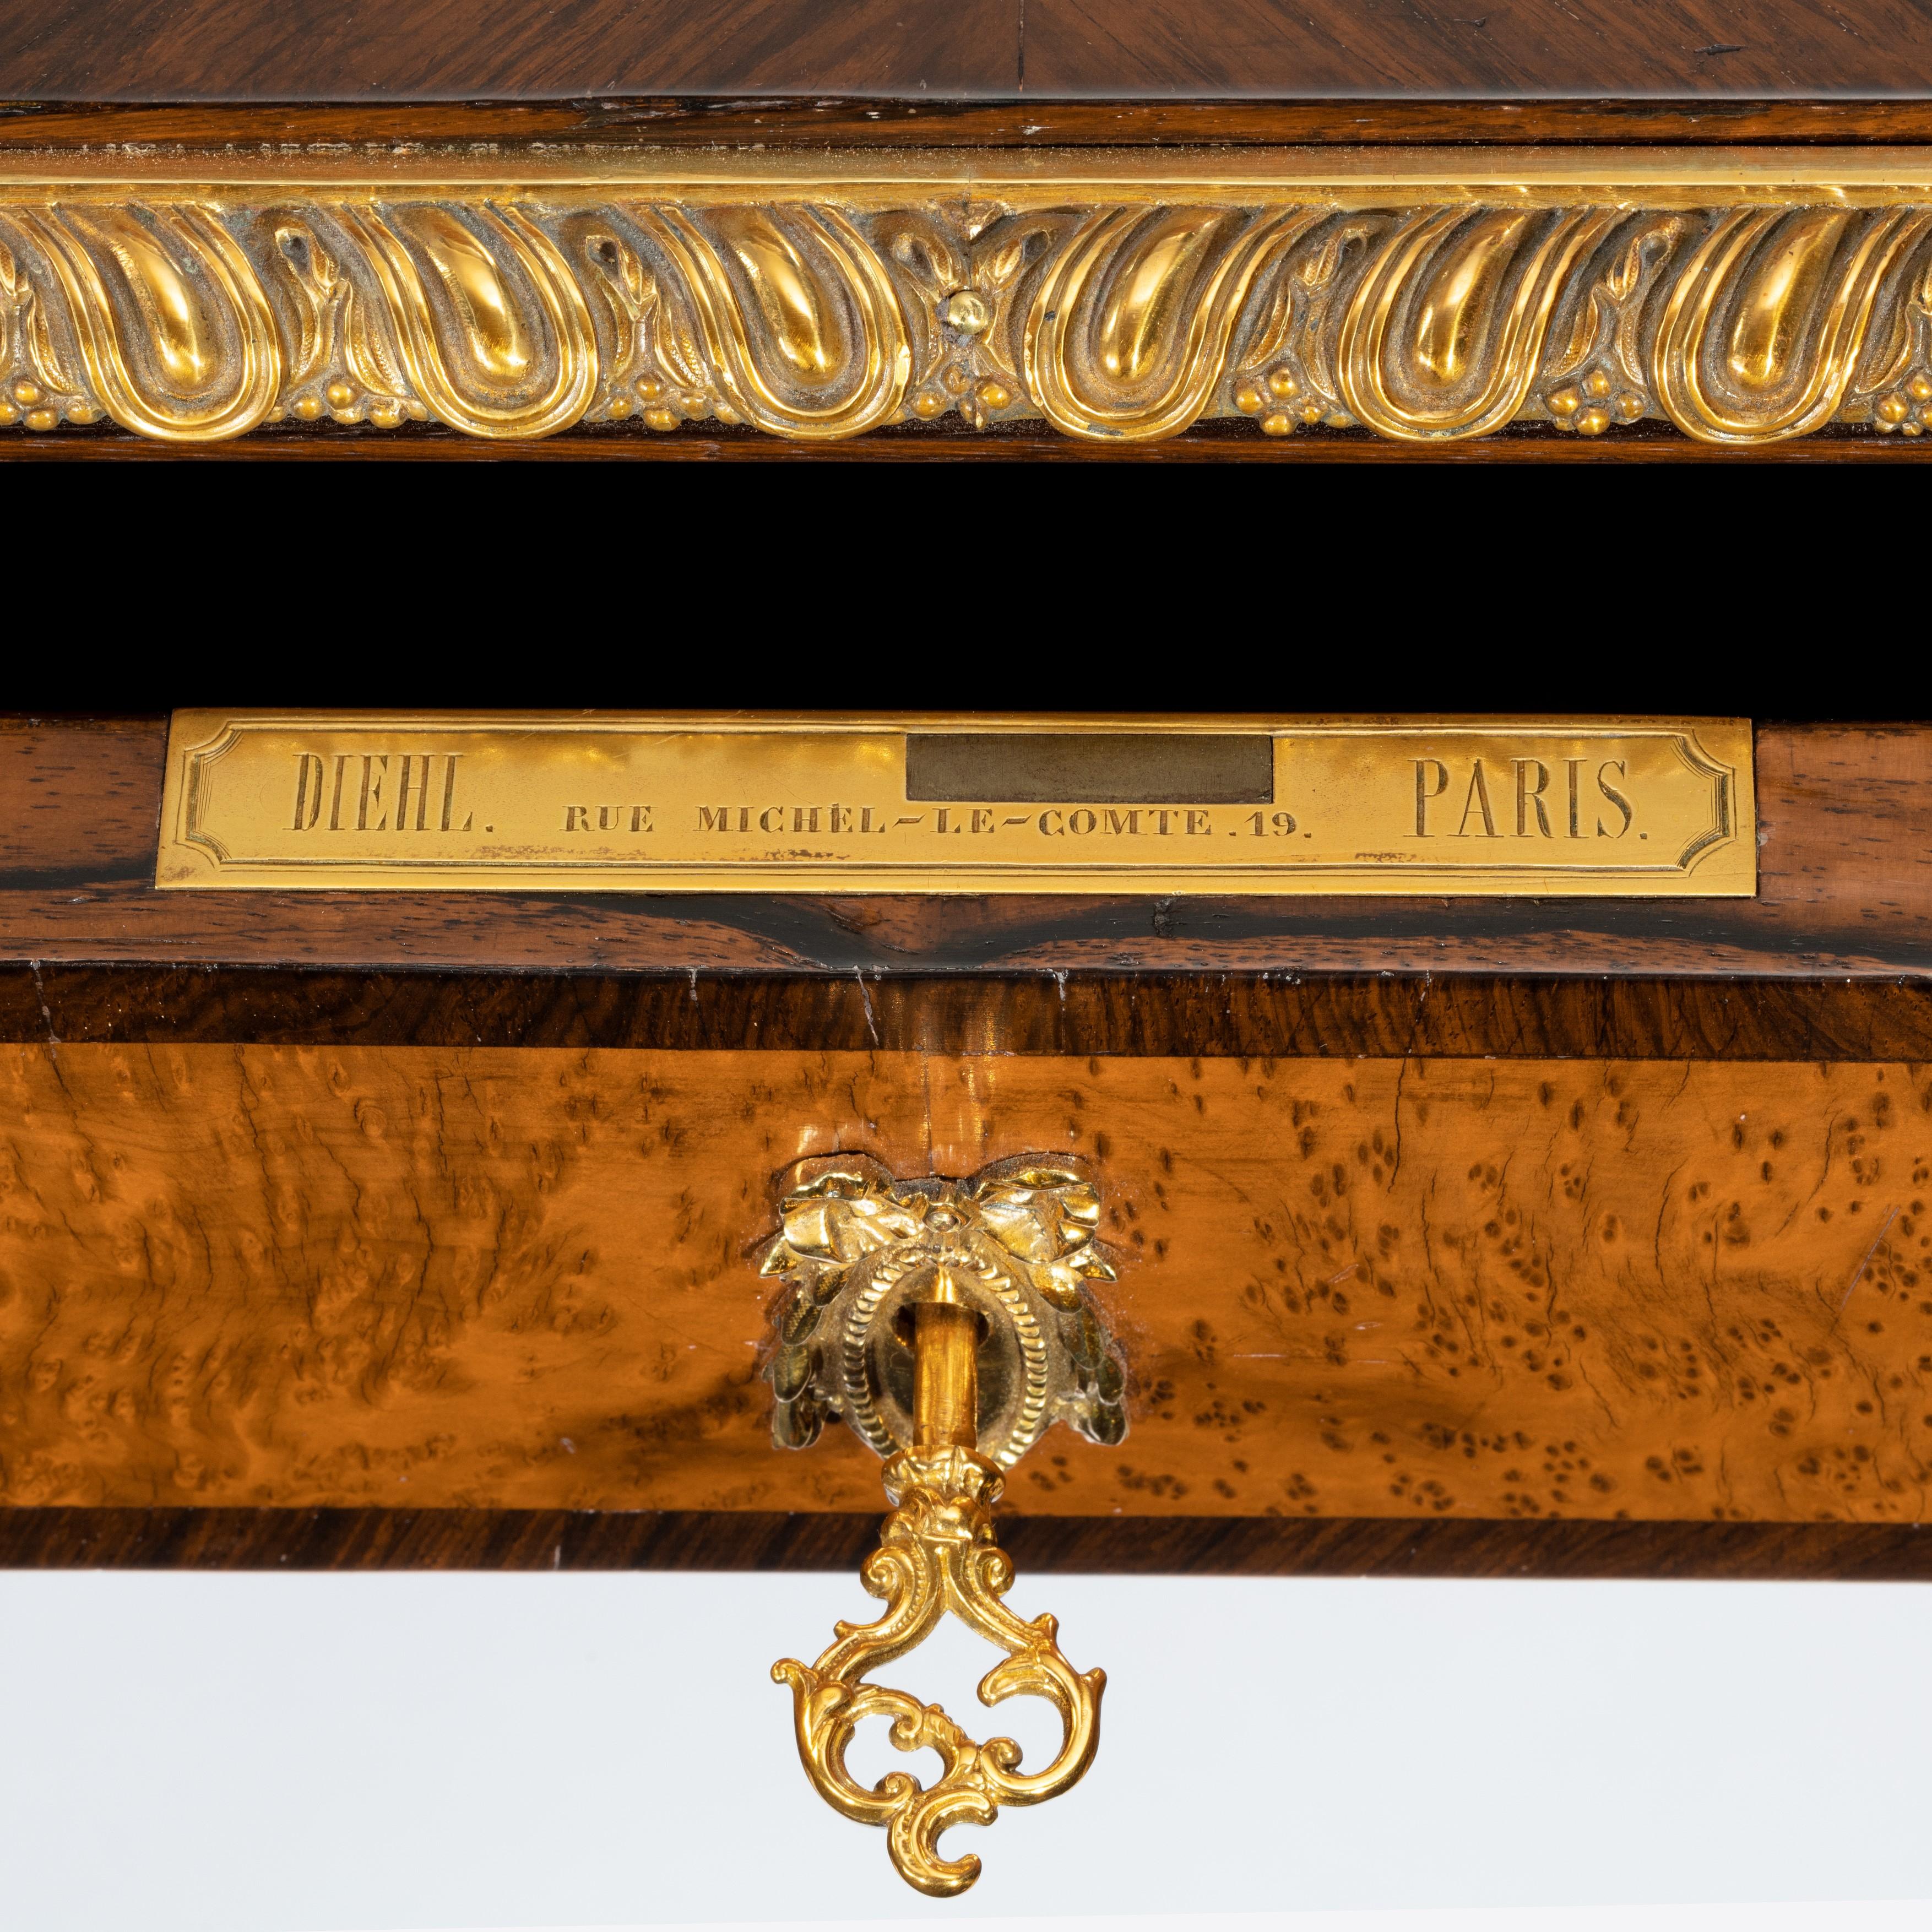 Amboyna Napoleon III Secretaire Desk by Diehl